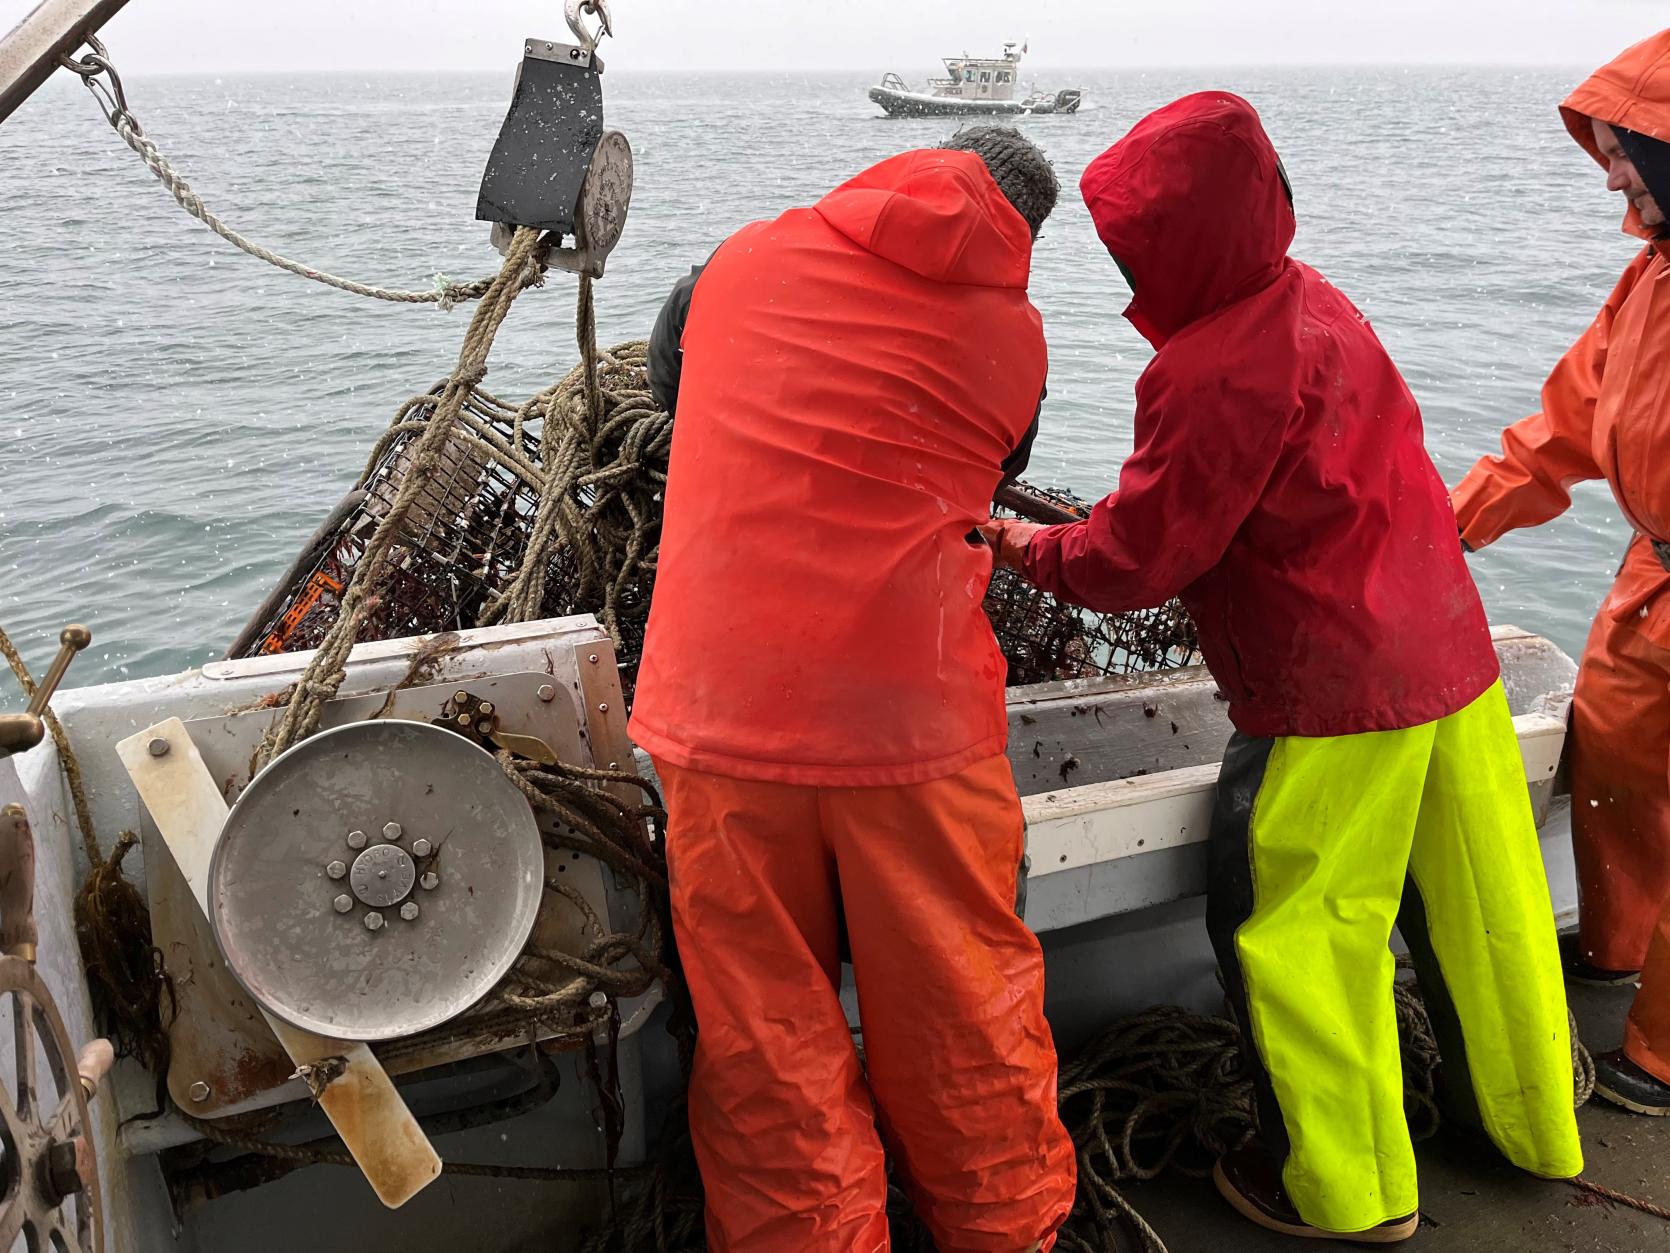 Fishermen retrieving derelict gear